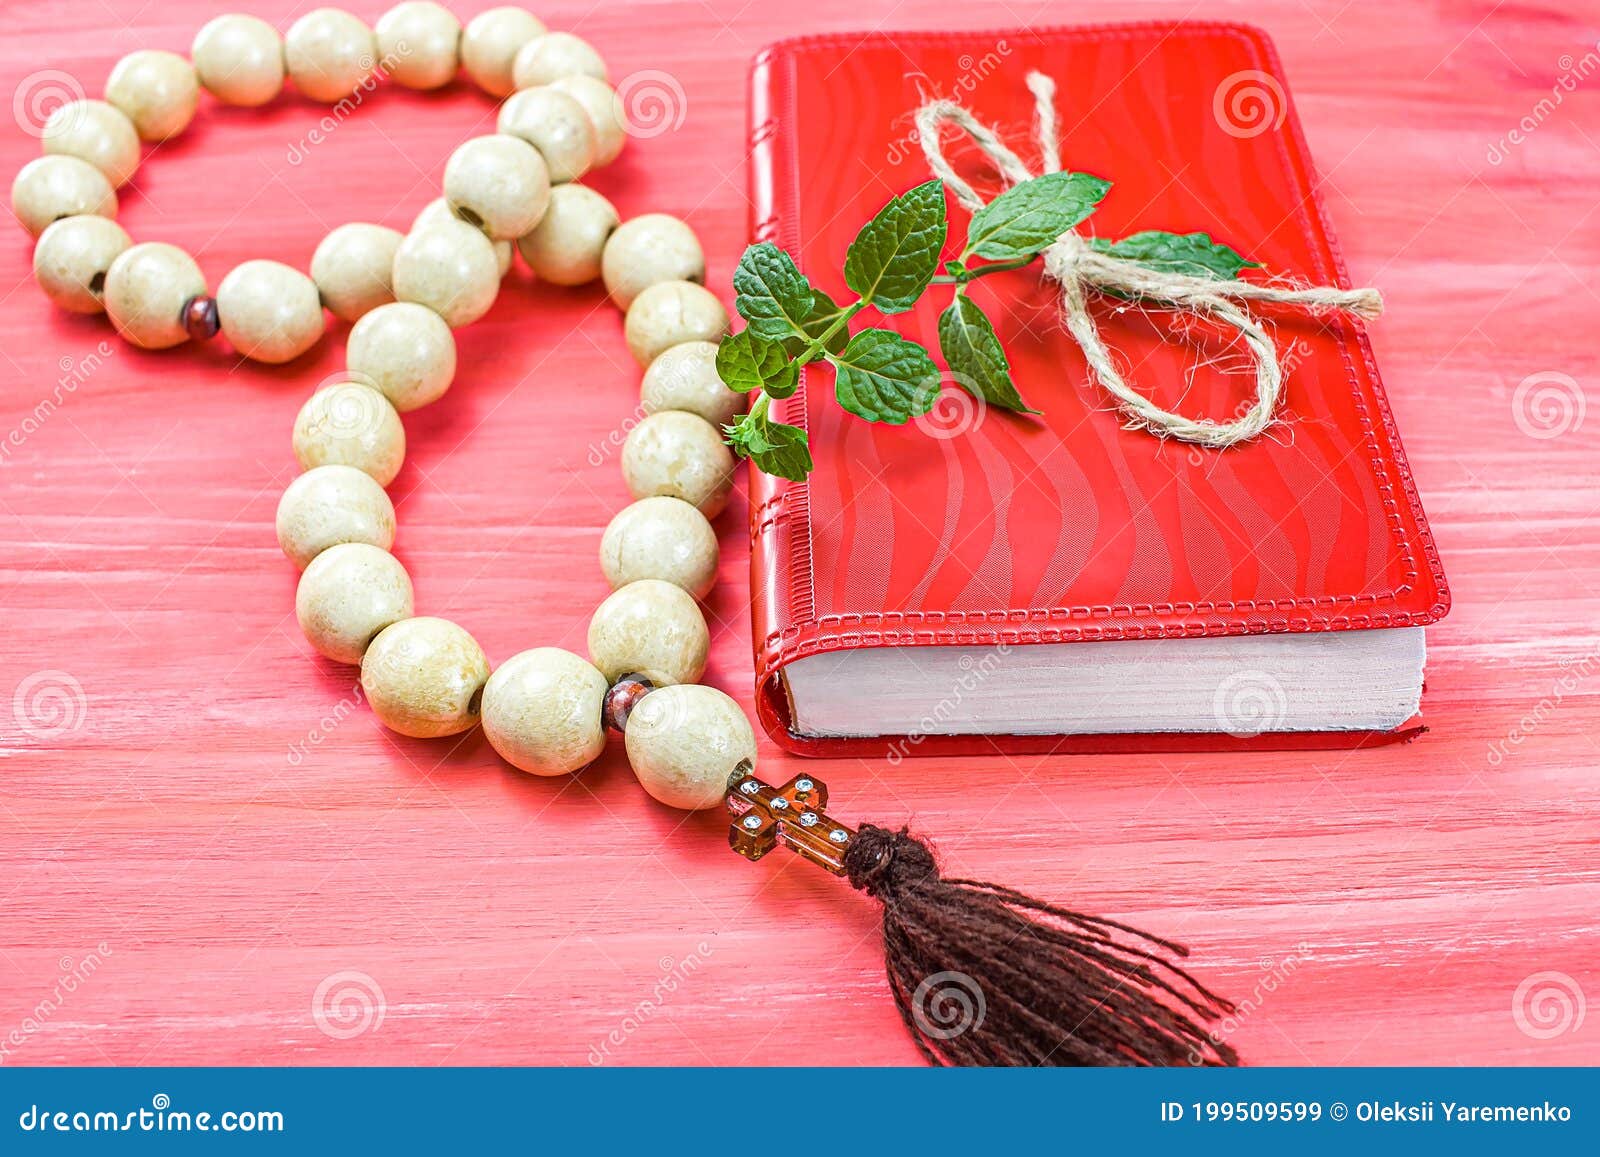 red prayer book download